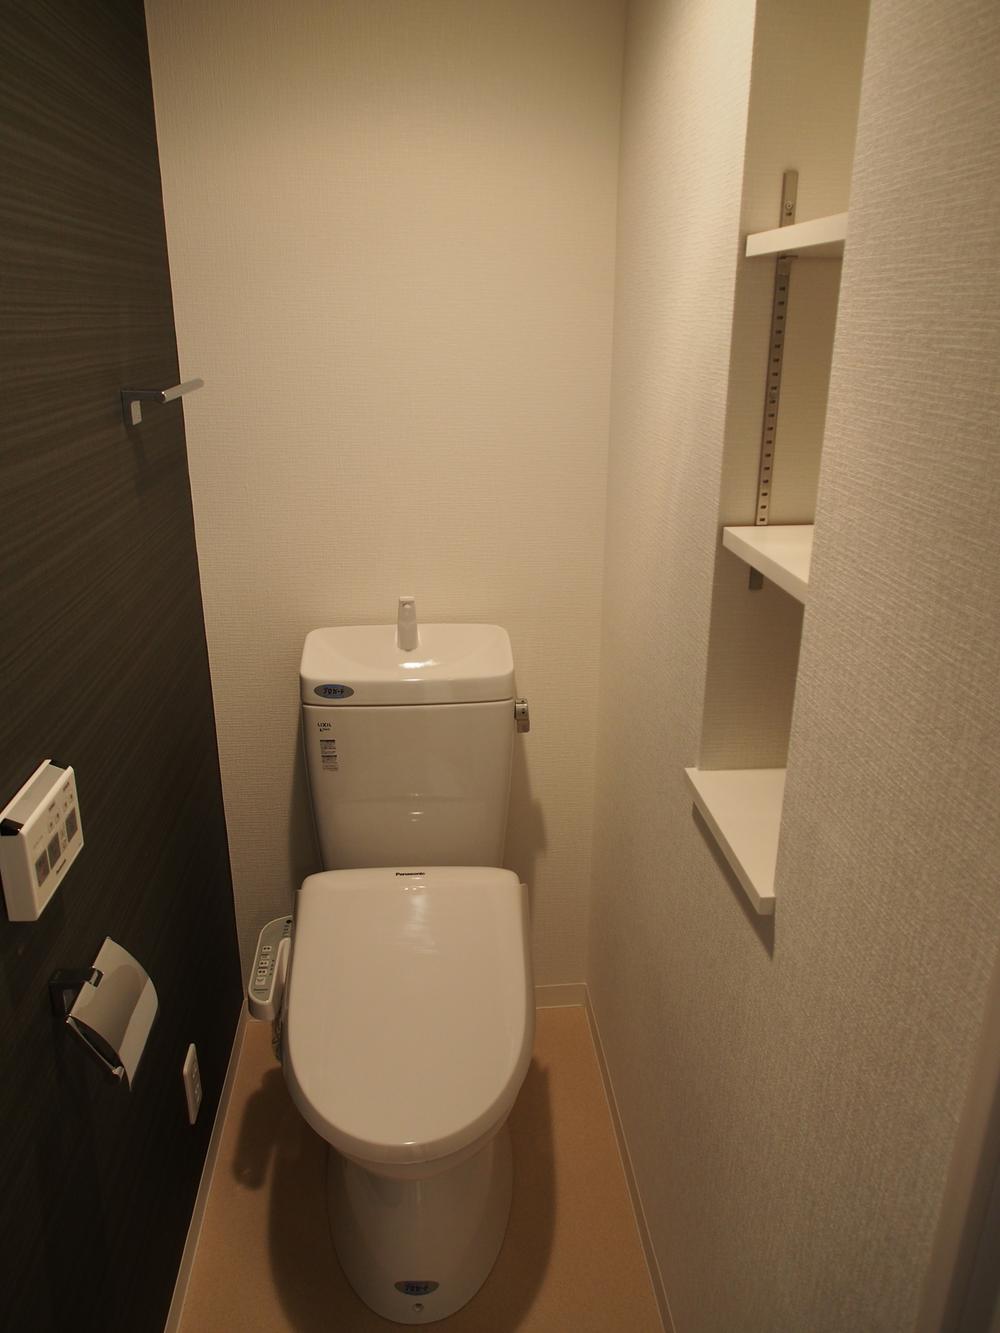 Toilet. With Panasonic warm water toilet seat. Storage room.